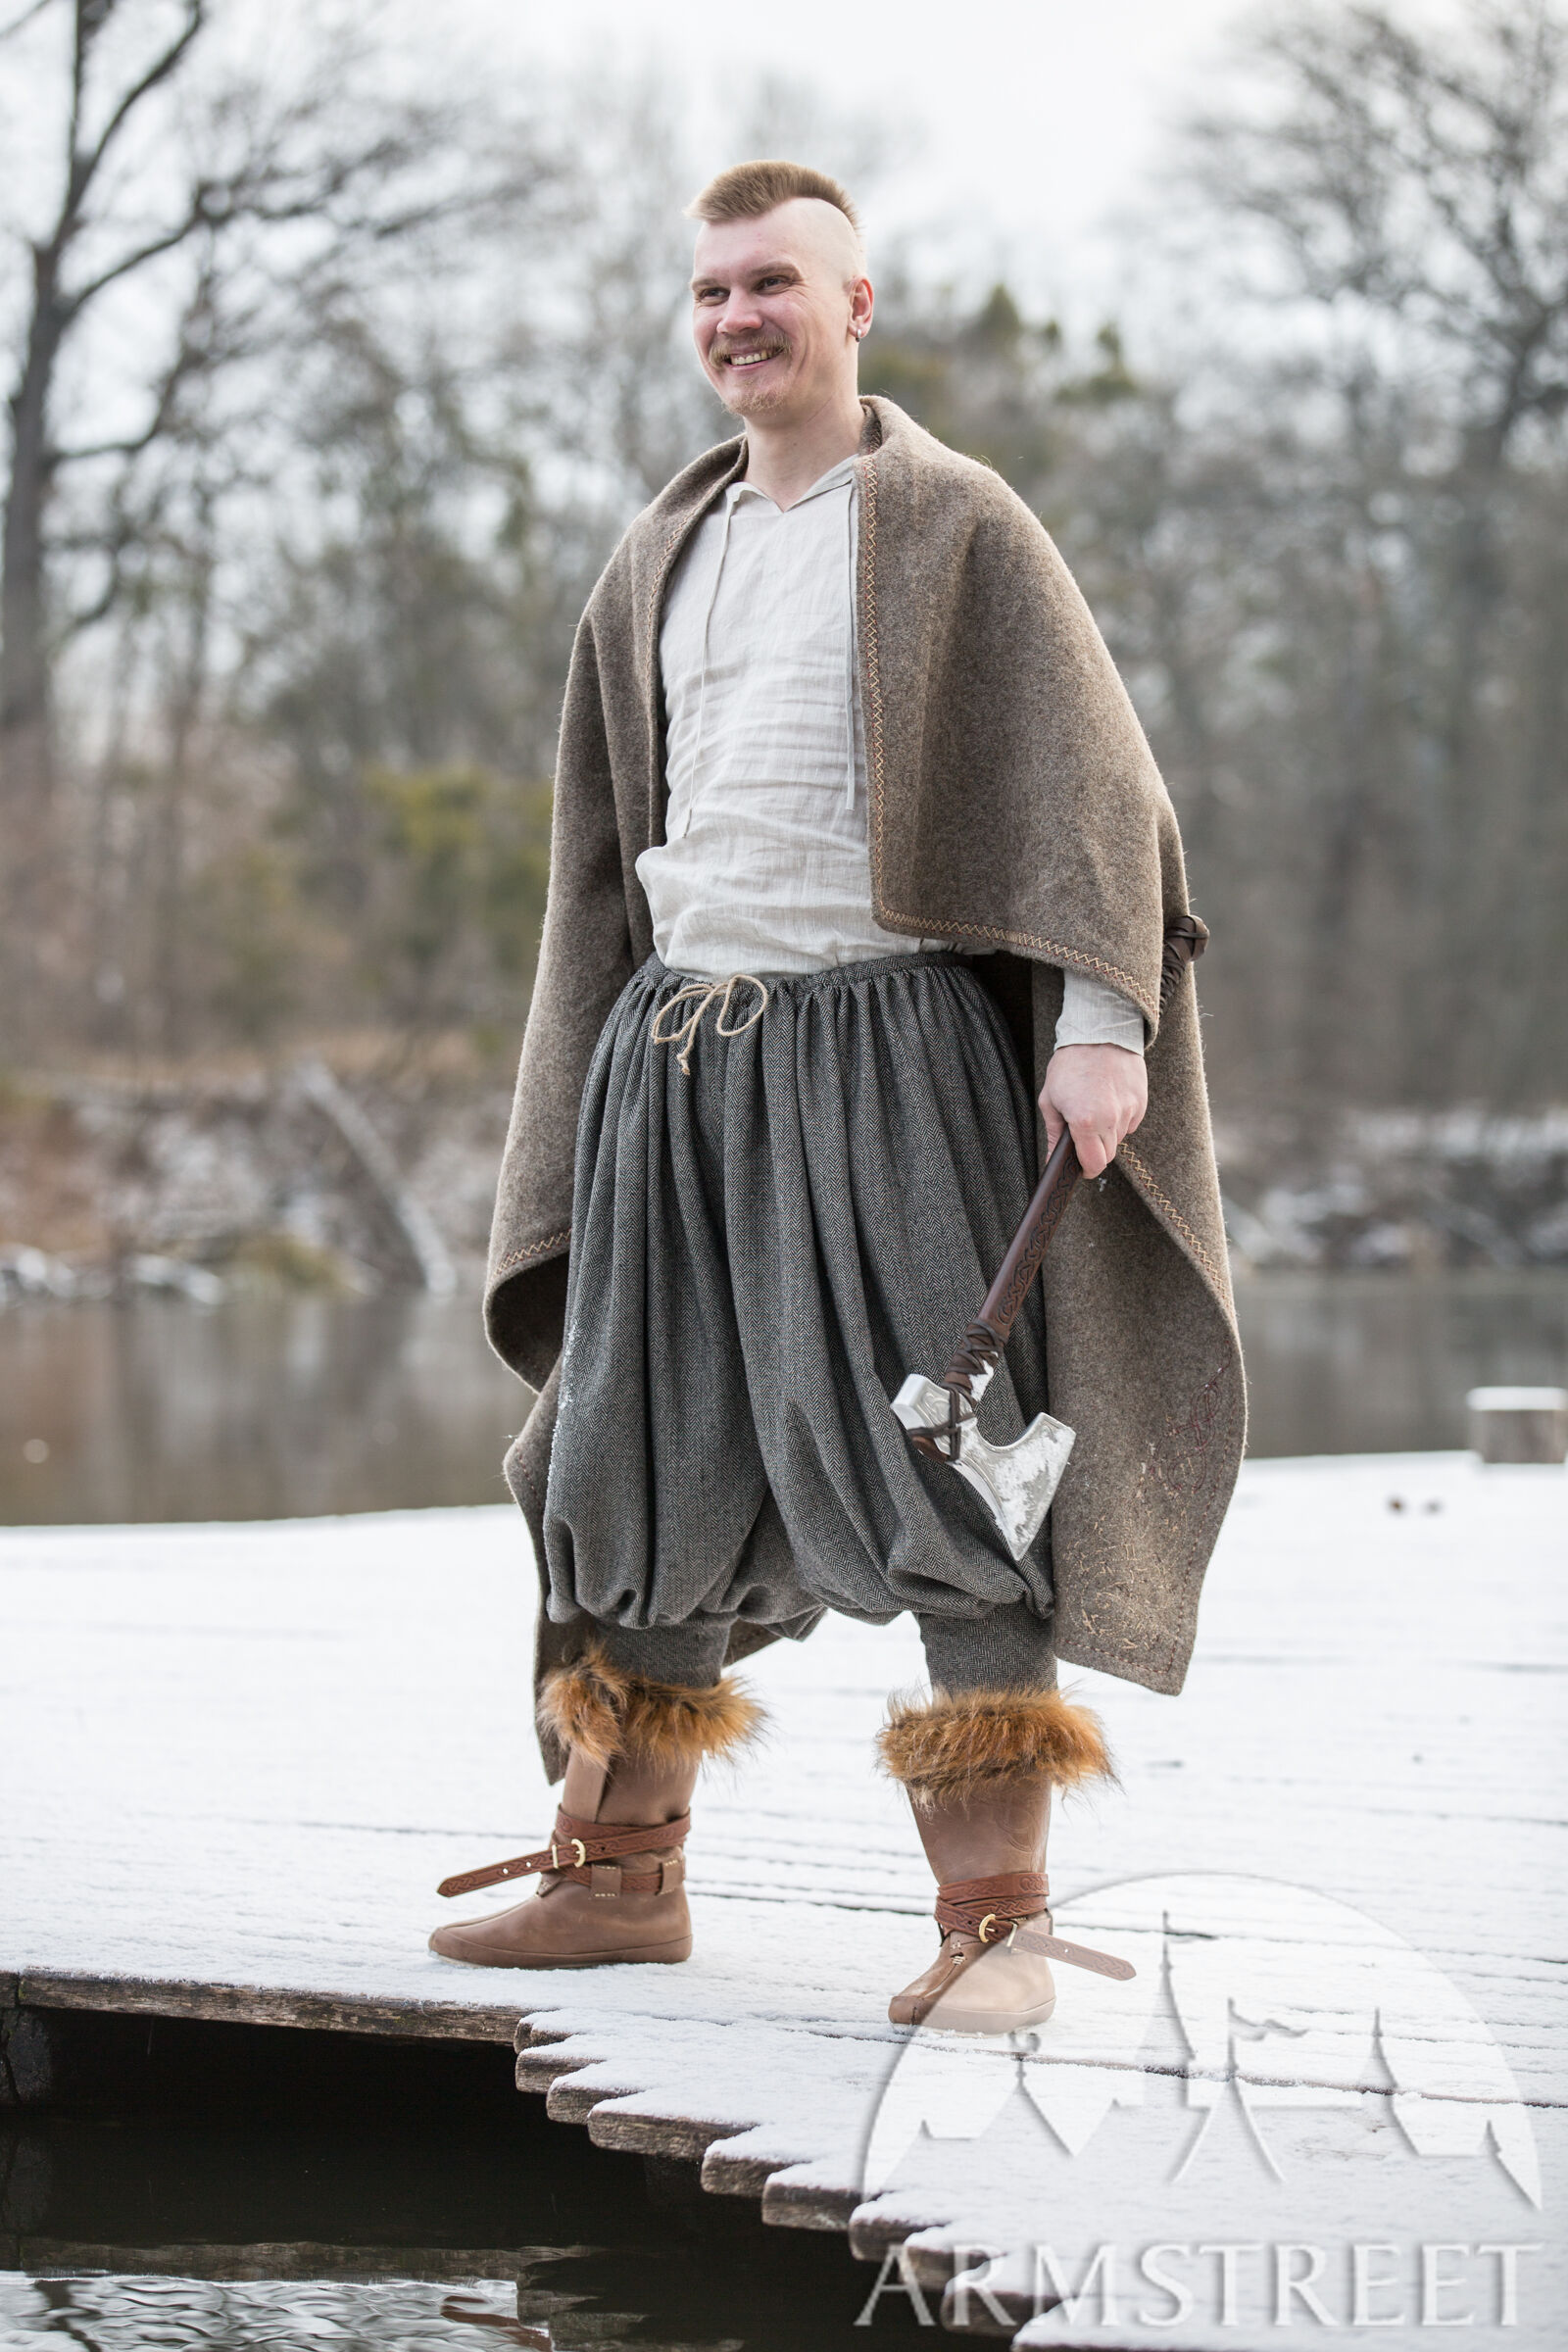 Viking Pants - Viking Clothing - Viking Style - Viking Clothes